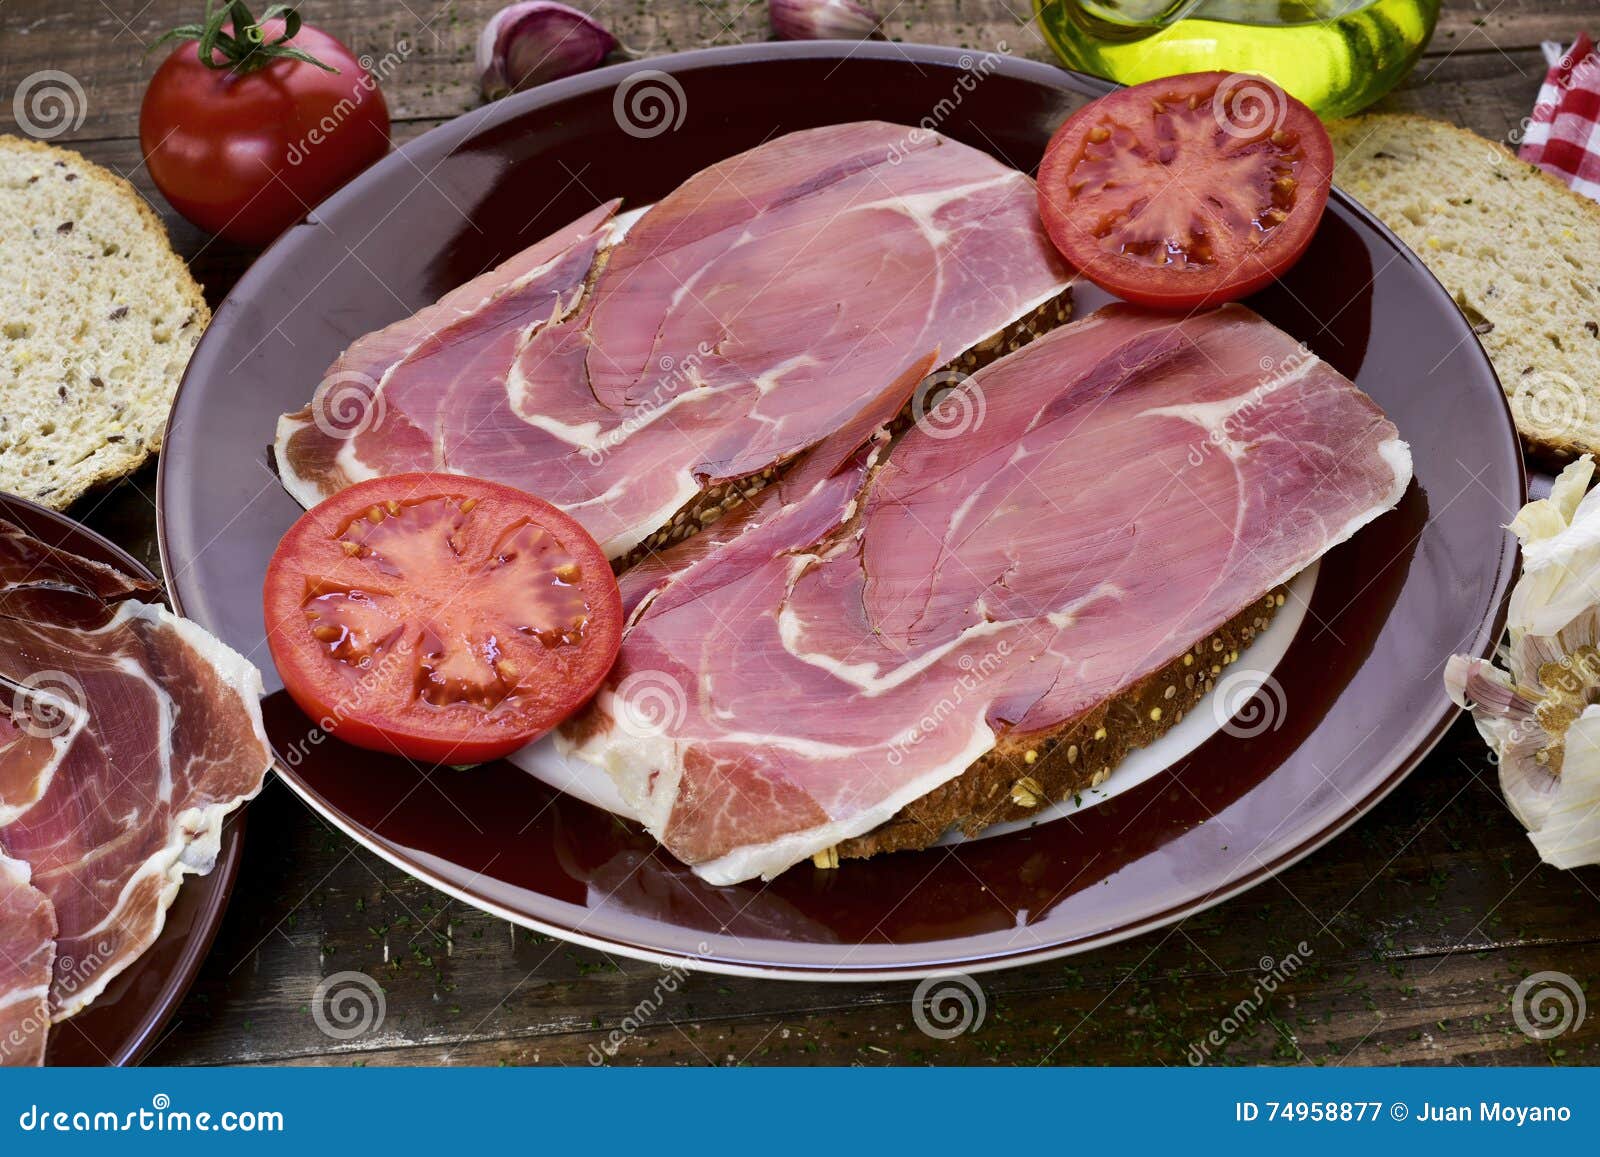 spanish pan con tomate y jamon, bread with tomato and serrano ha